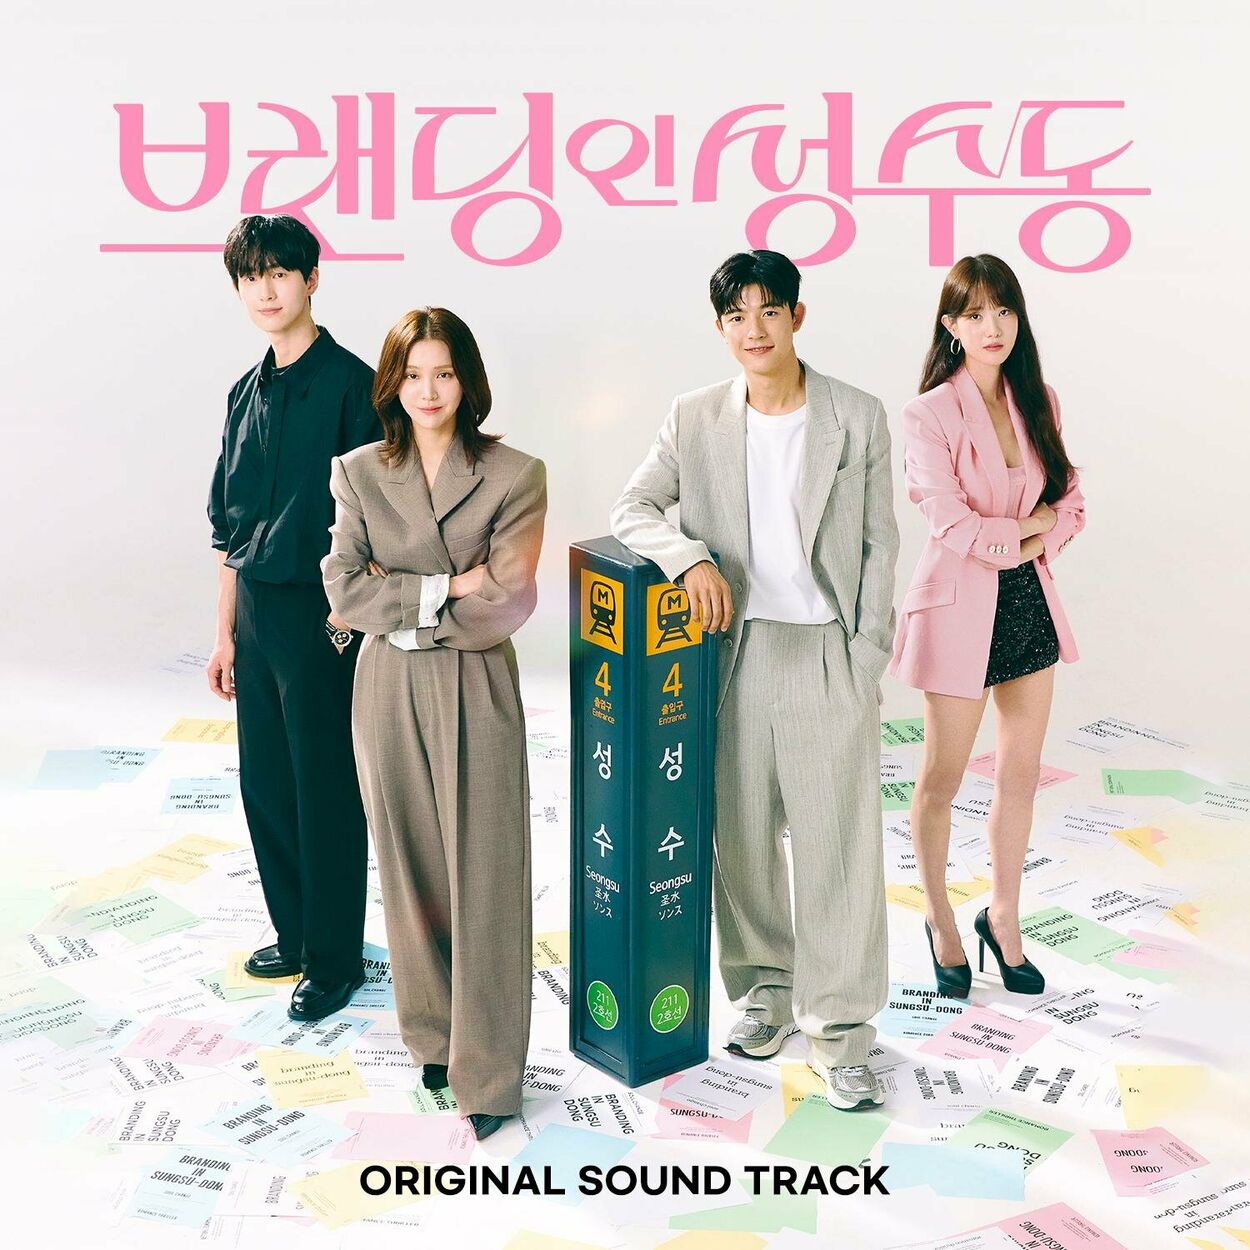 Various Artists – Branding in Seongsu OST